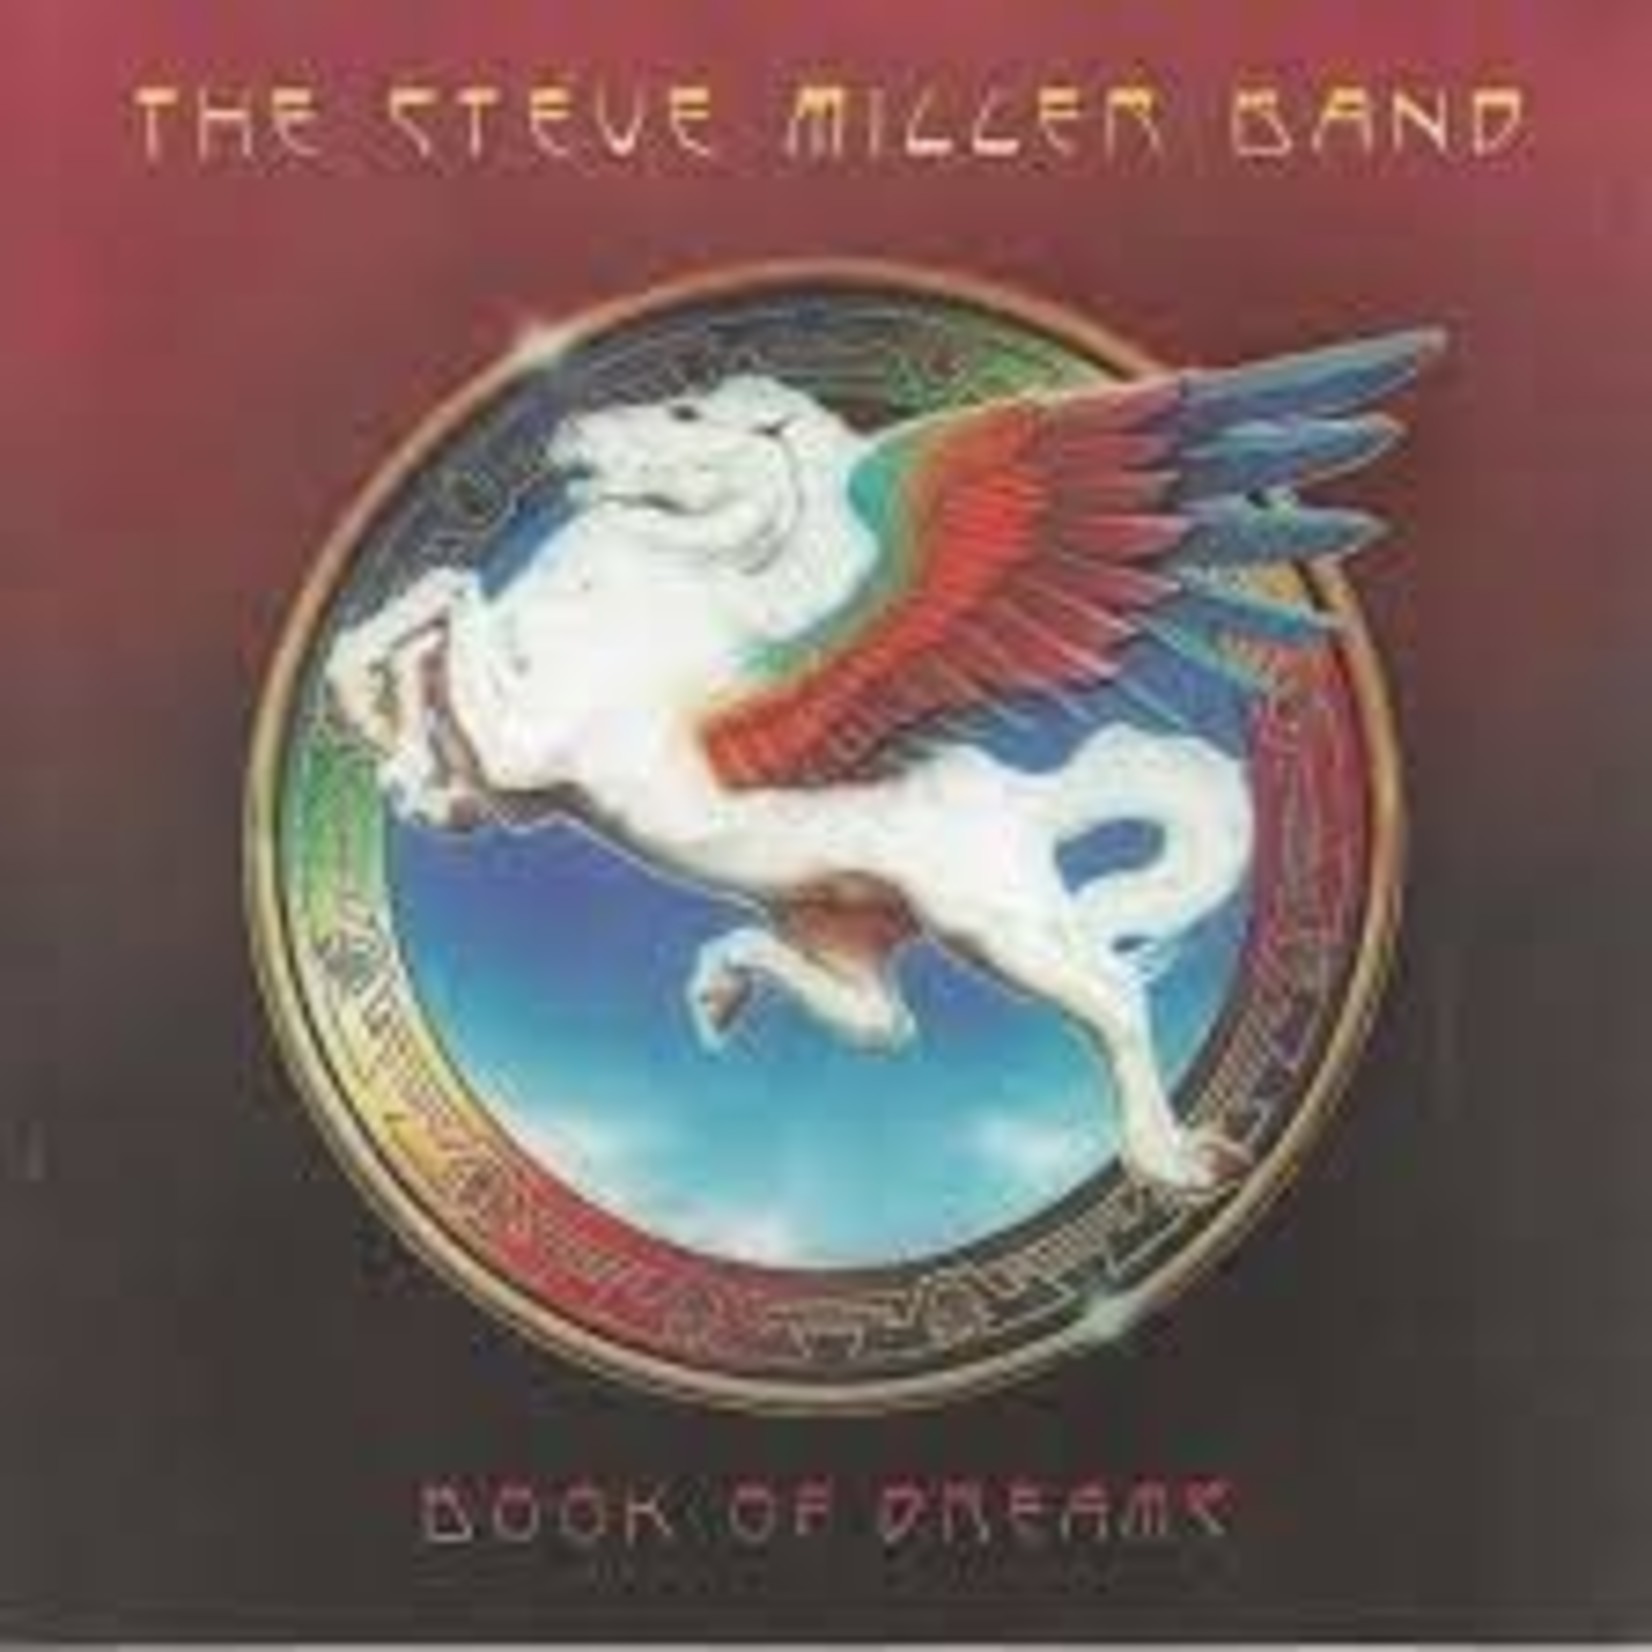 STEVE MILLER BAND - book of dreams LP